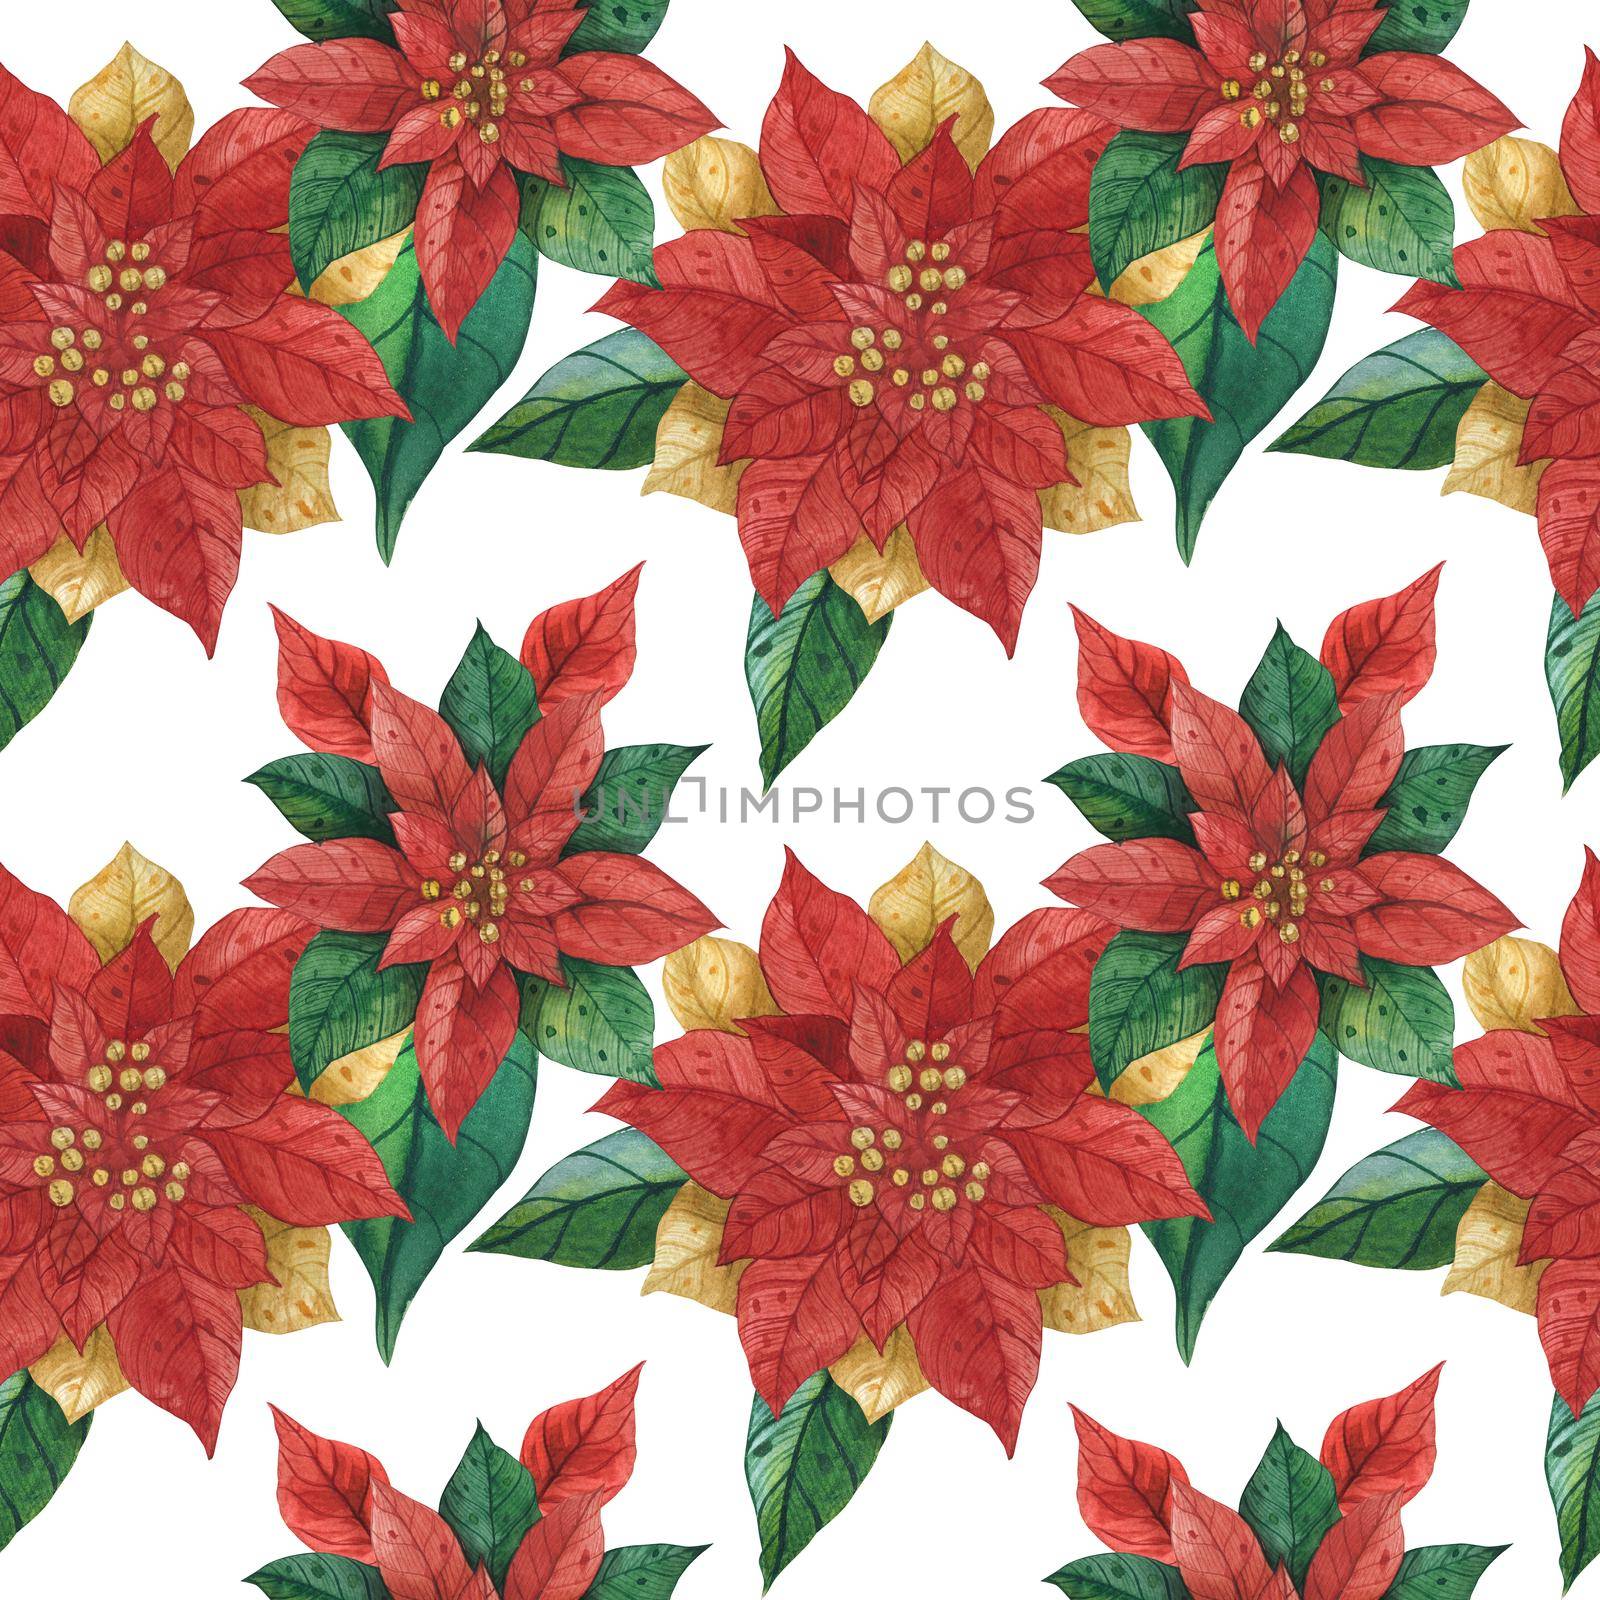 Christmas Star Poinsettia seamless pattern by Xeniasnowstorm